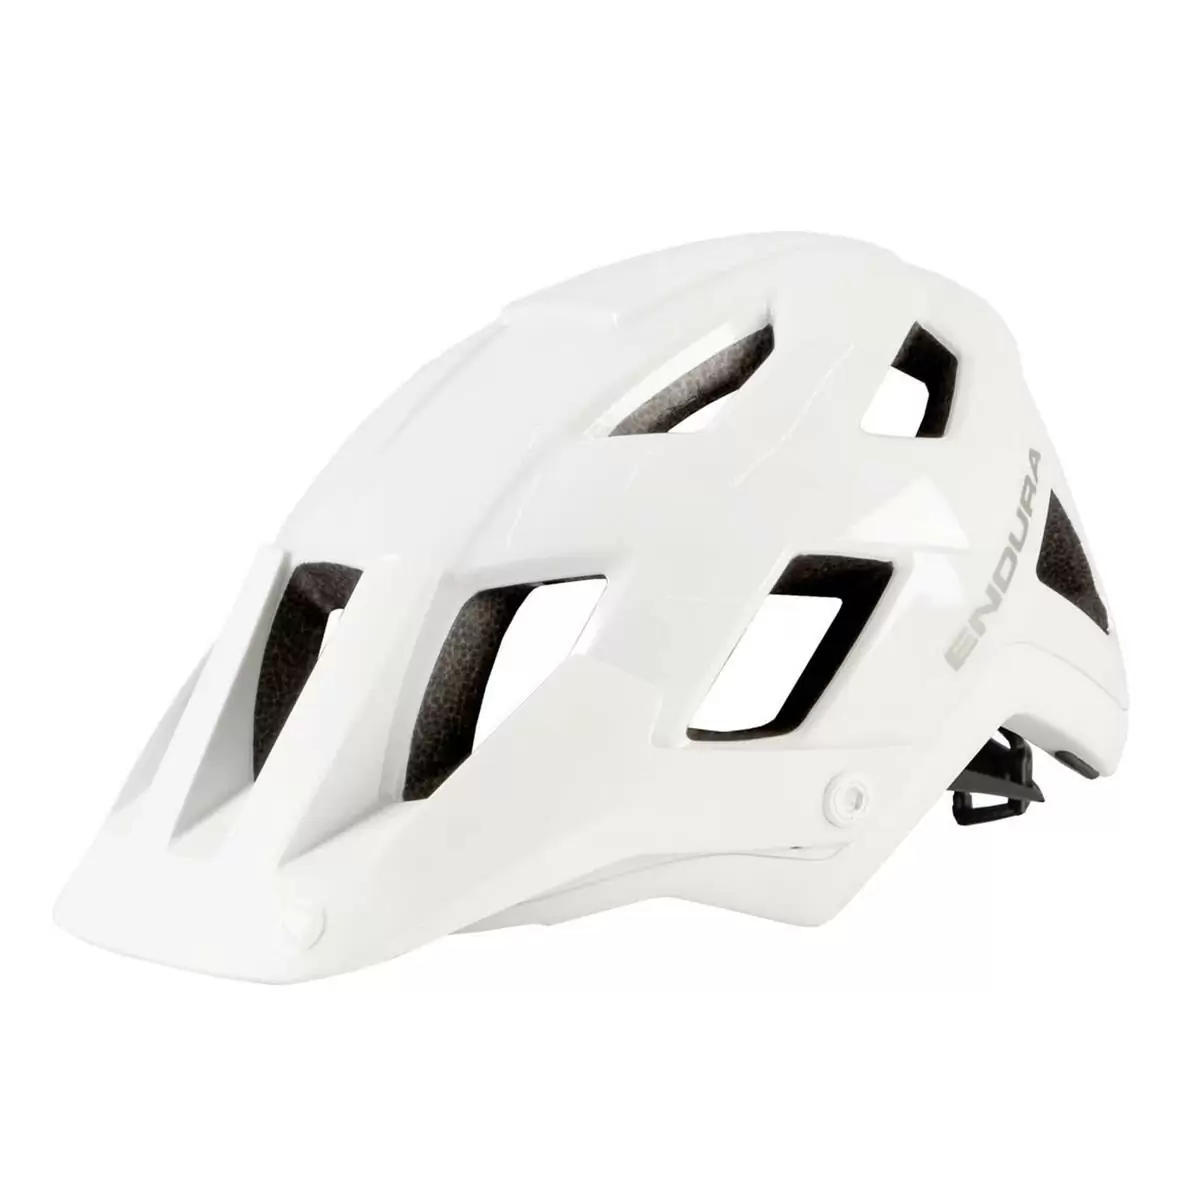 Hummvee Plus MTB Enduro Helmet White Size L/XL (58-63cm) - image